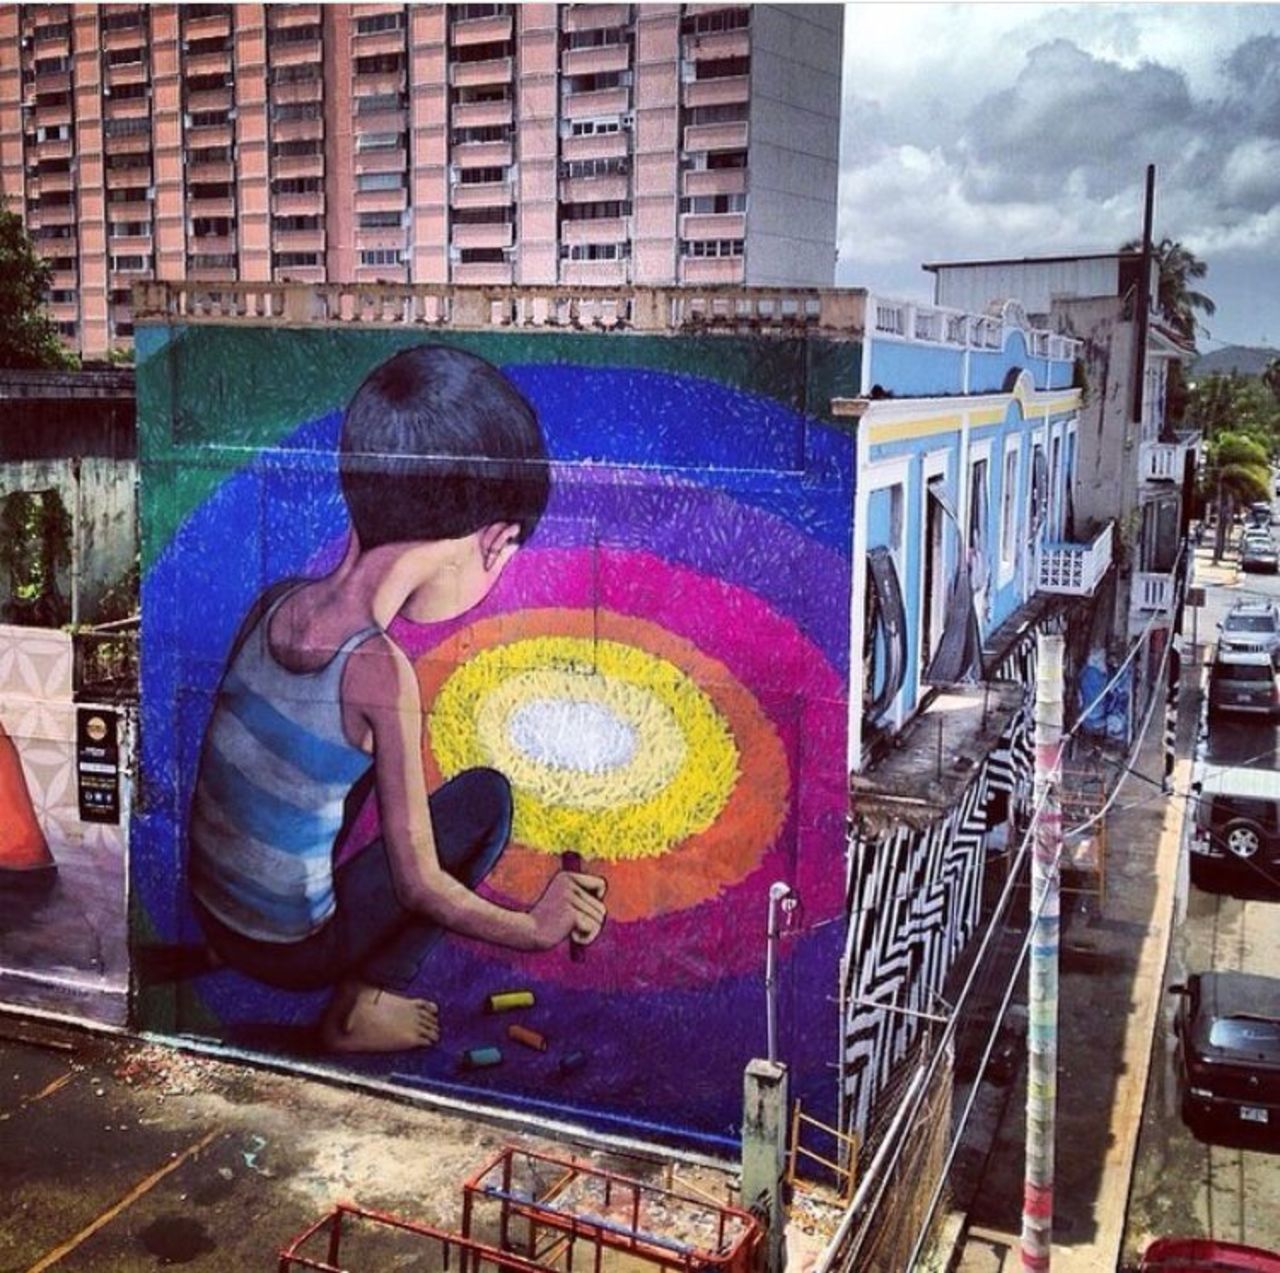 New work by Seth Globepainter #streetart #mural #graffiti #art https://t.co/2itS7P7thN